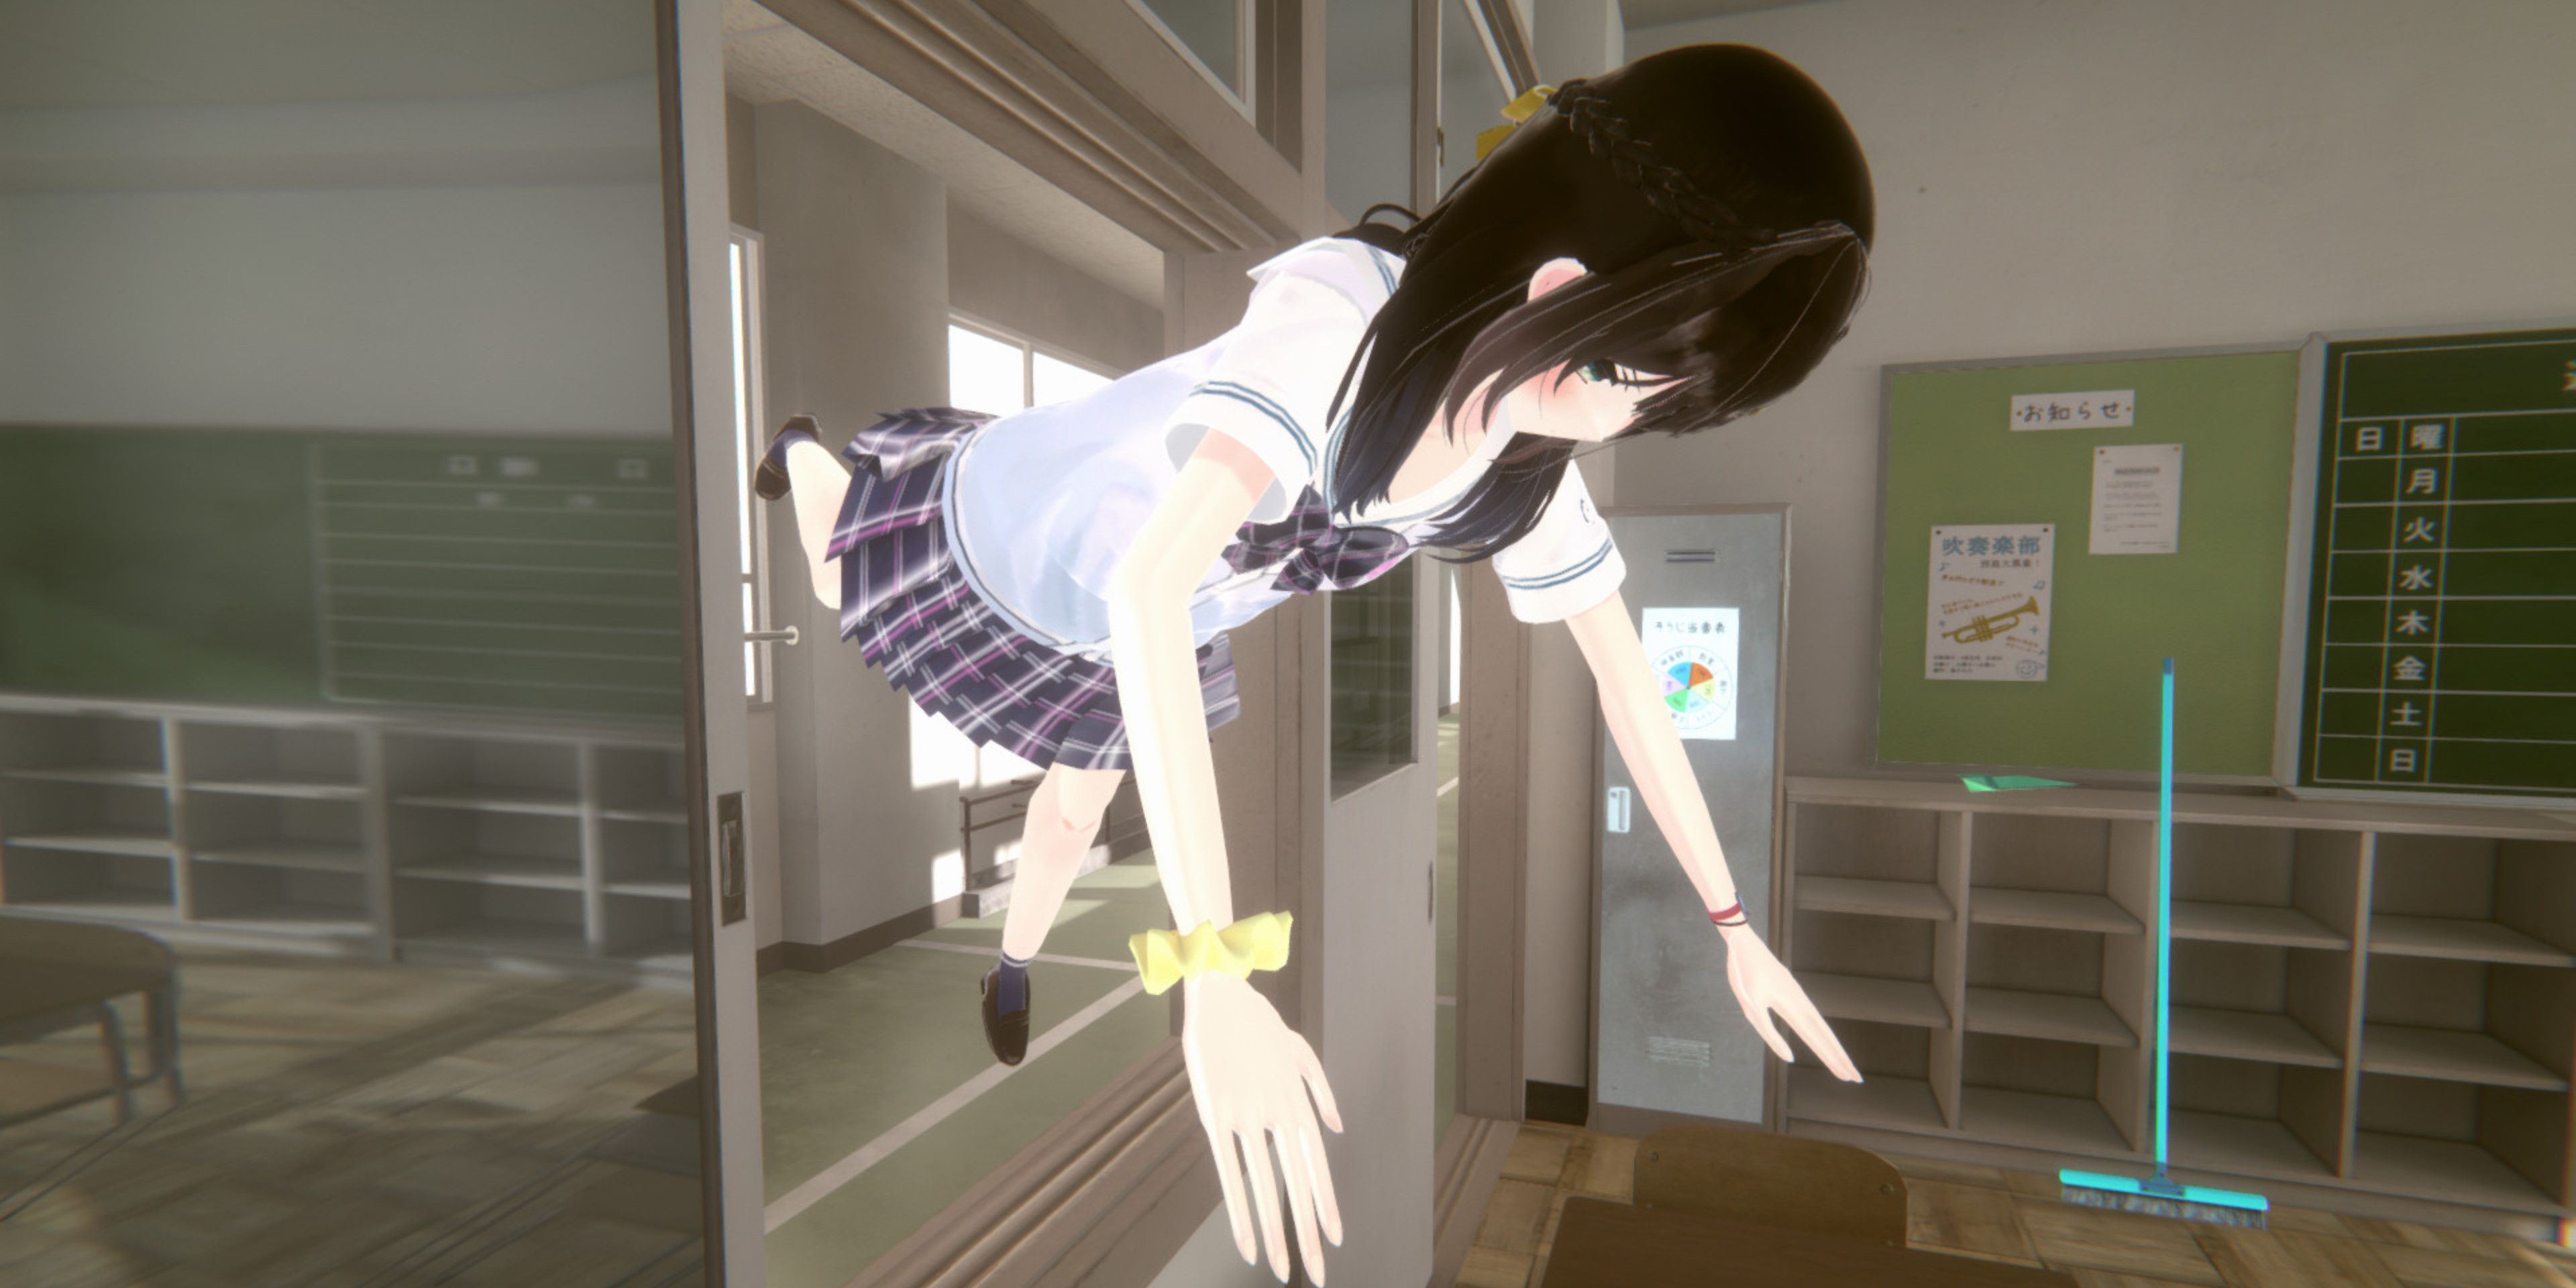 Female classmate jumping into classroom through the window